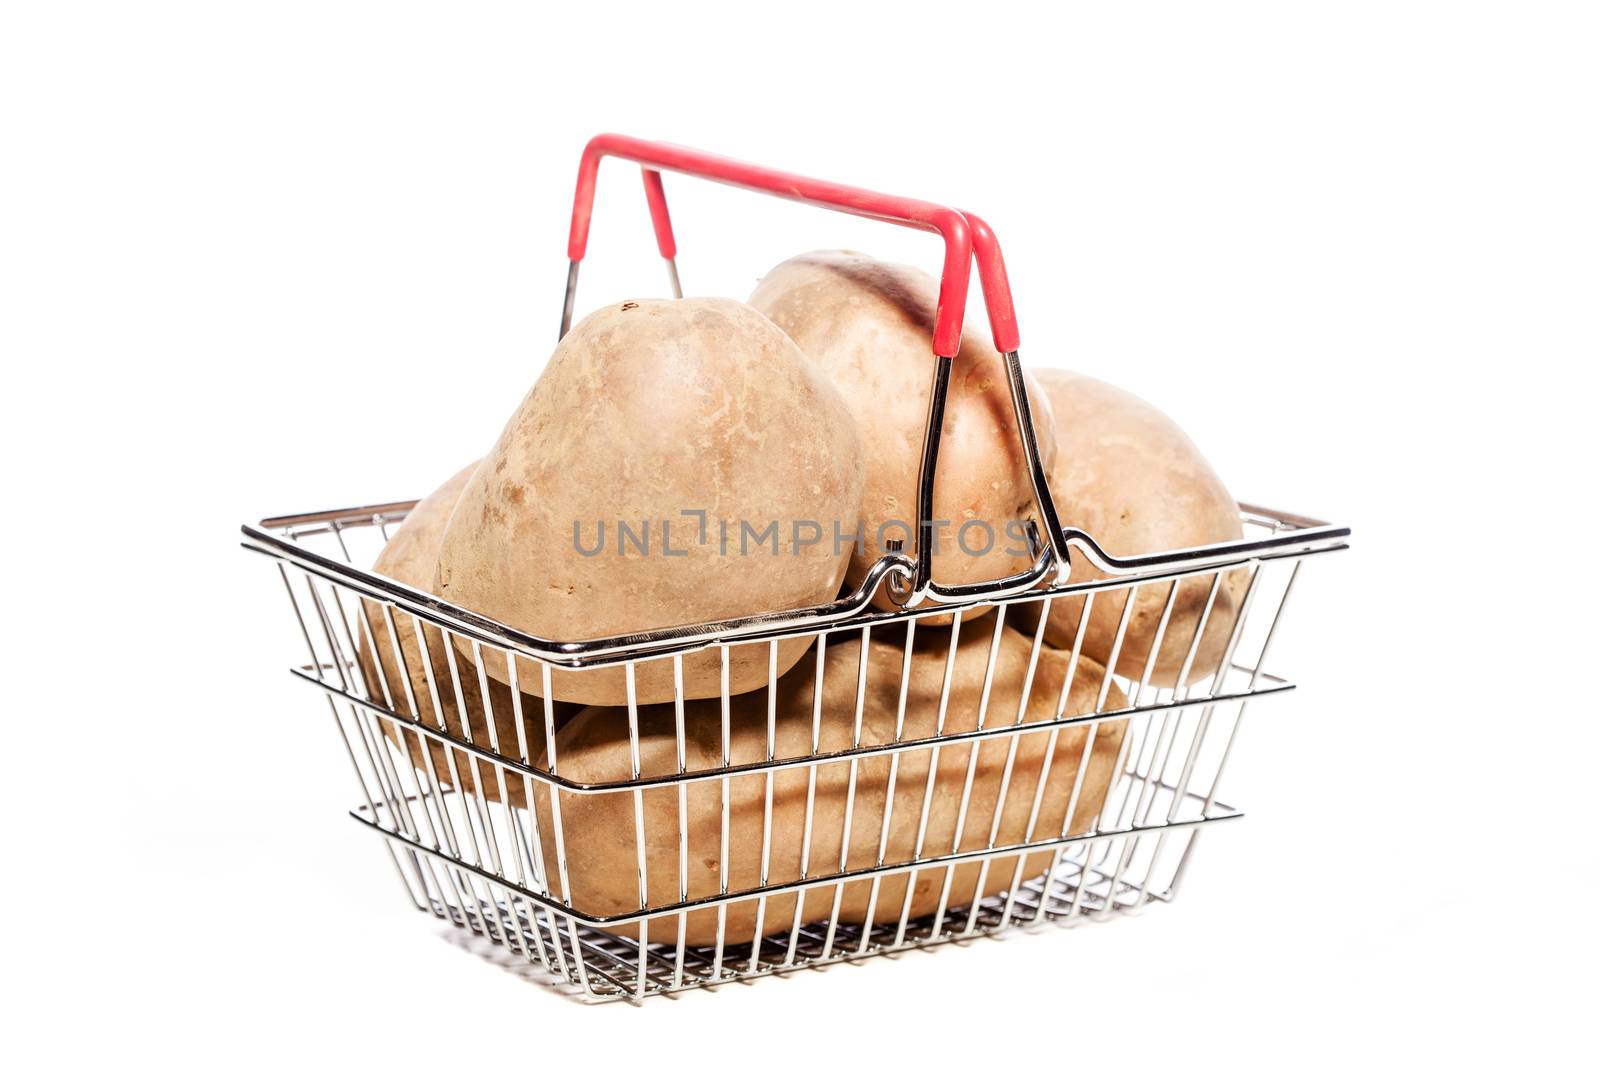 potatoes in a shopping basket by kokimk